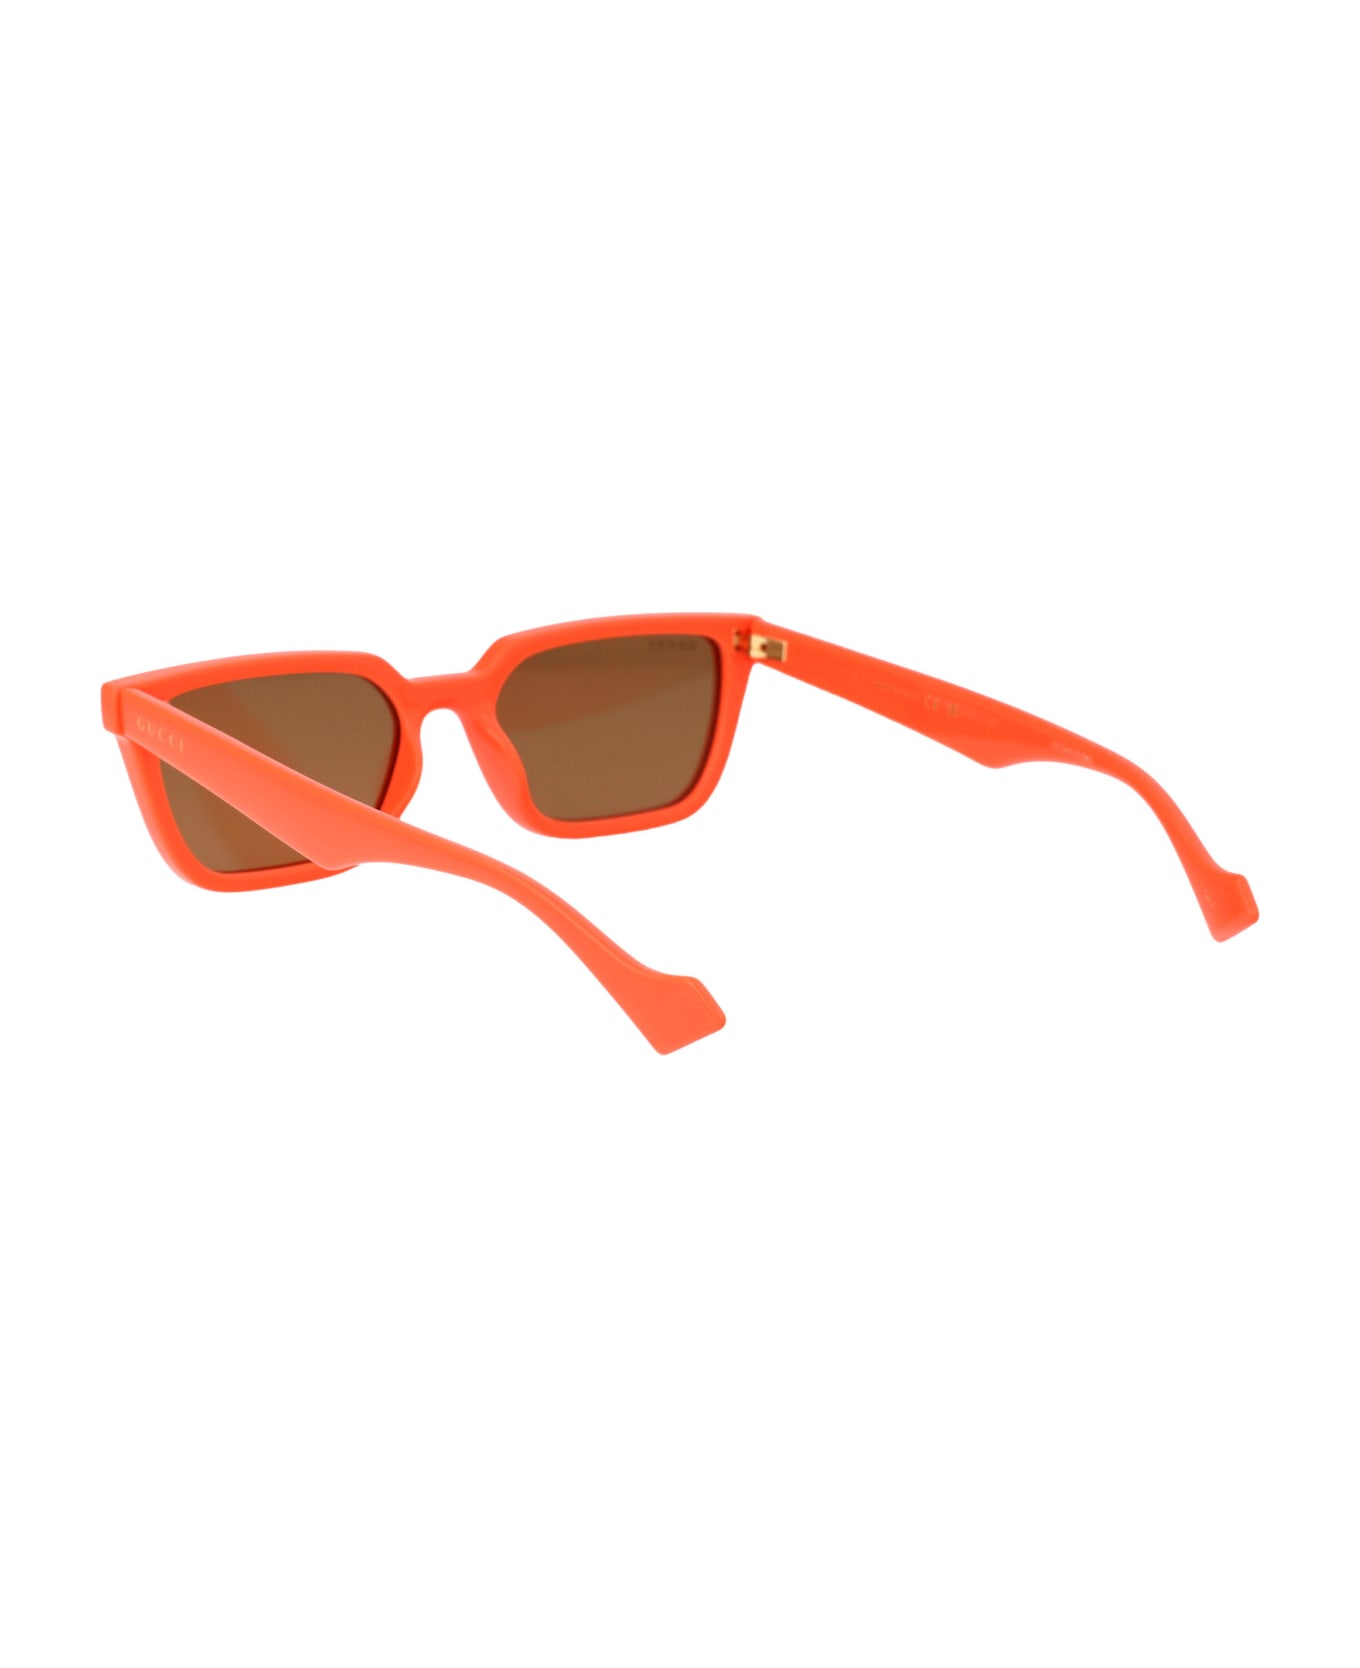 Gucci Eyewear Gg1539s Sunglasses - 004 ORANGE ORANGE BROWN